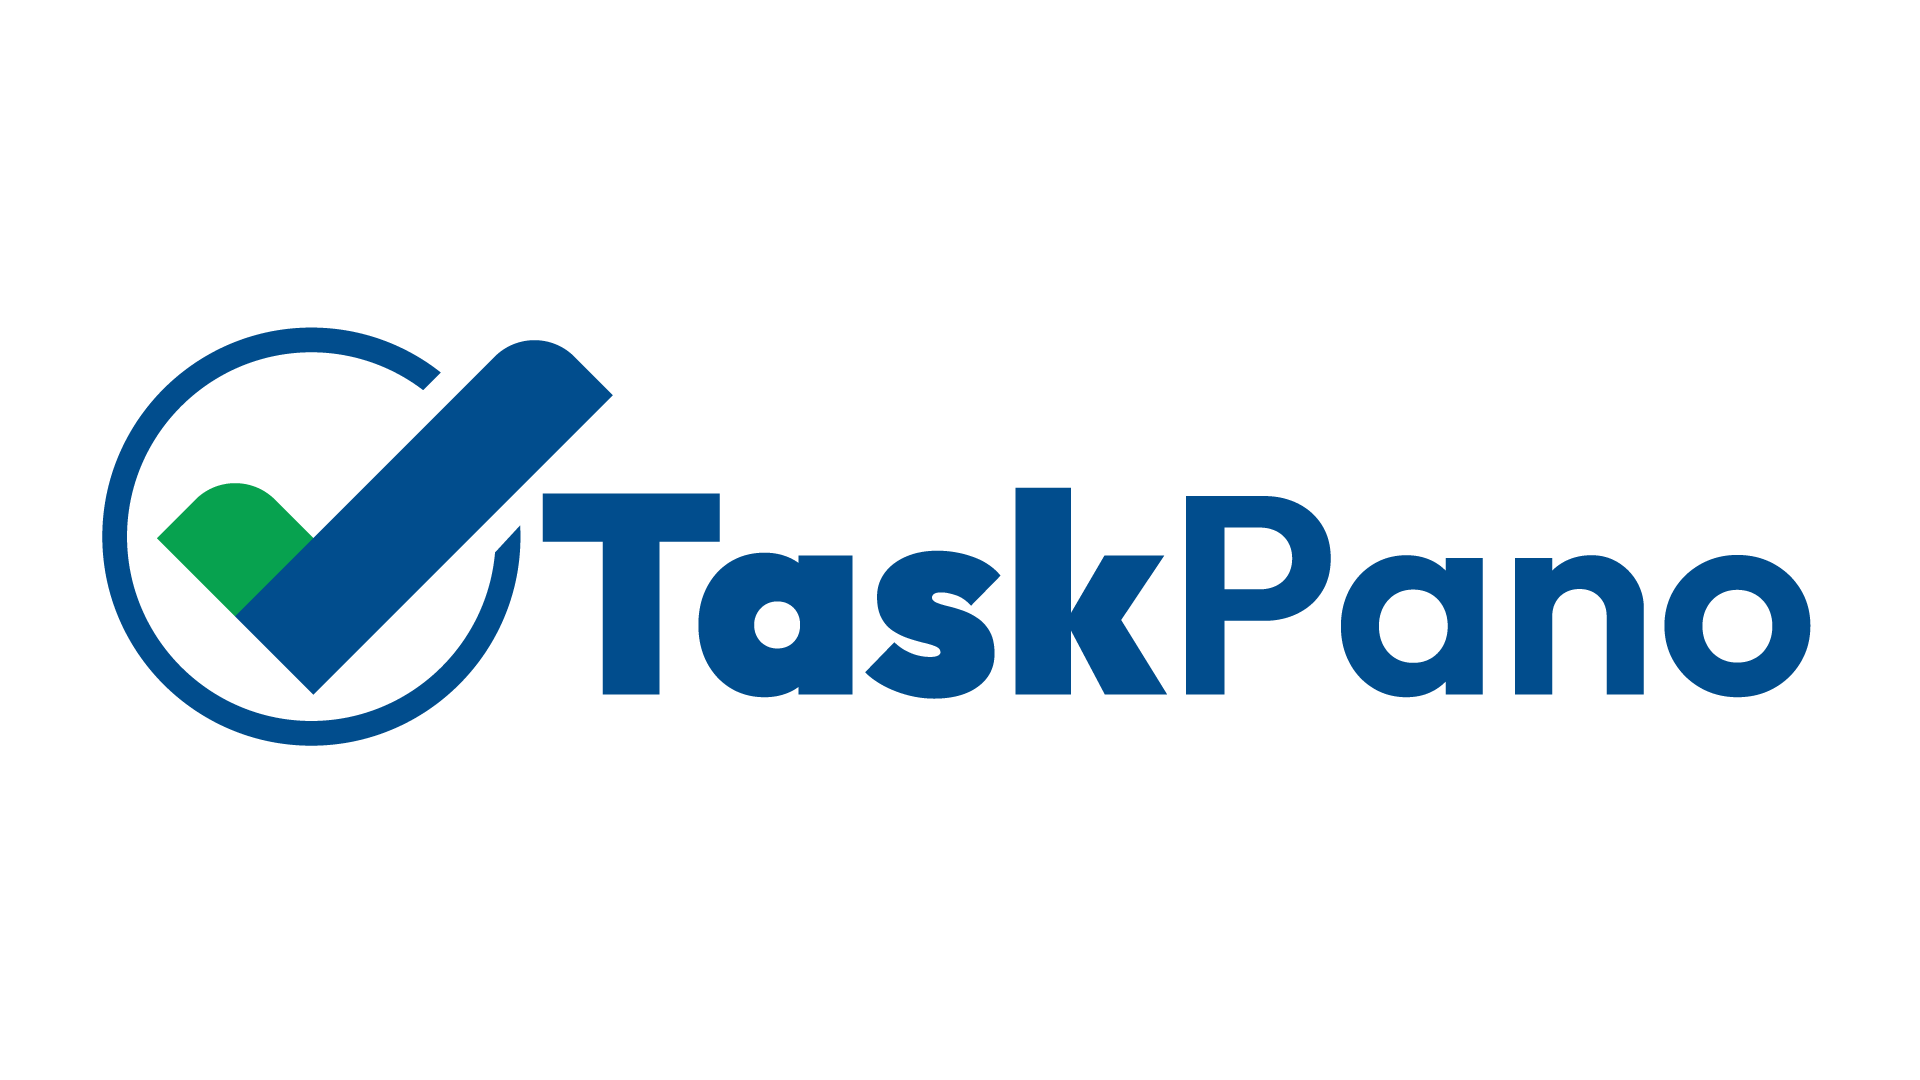 Taskpano Logo